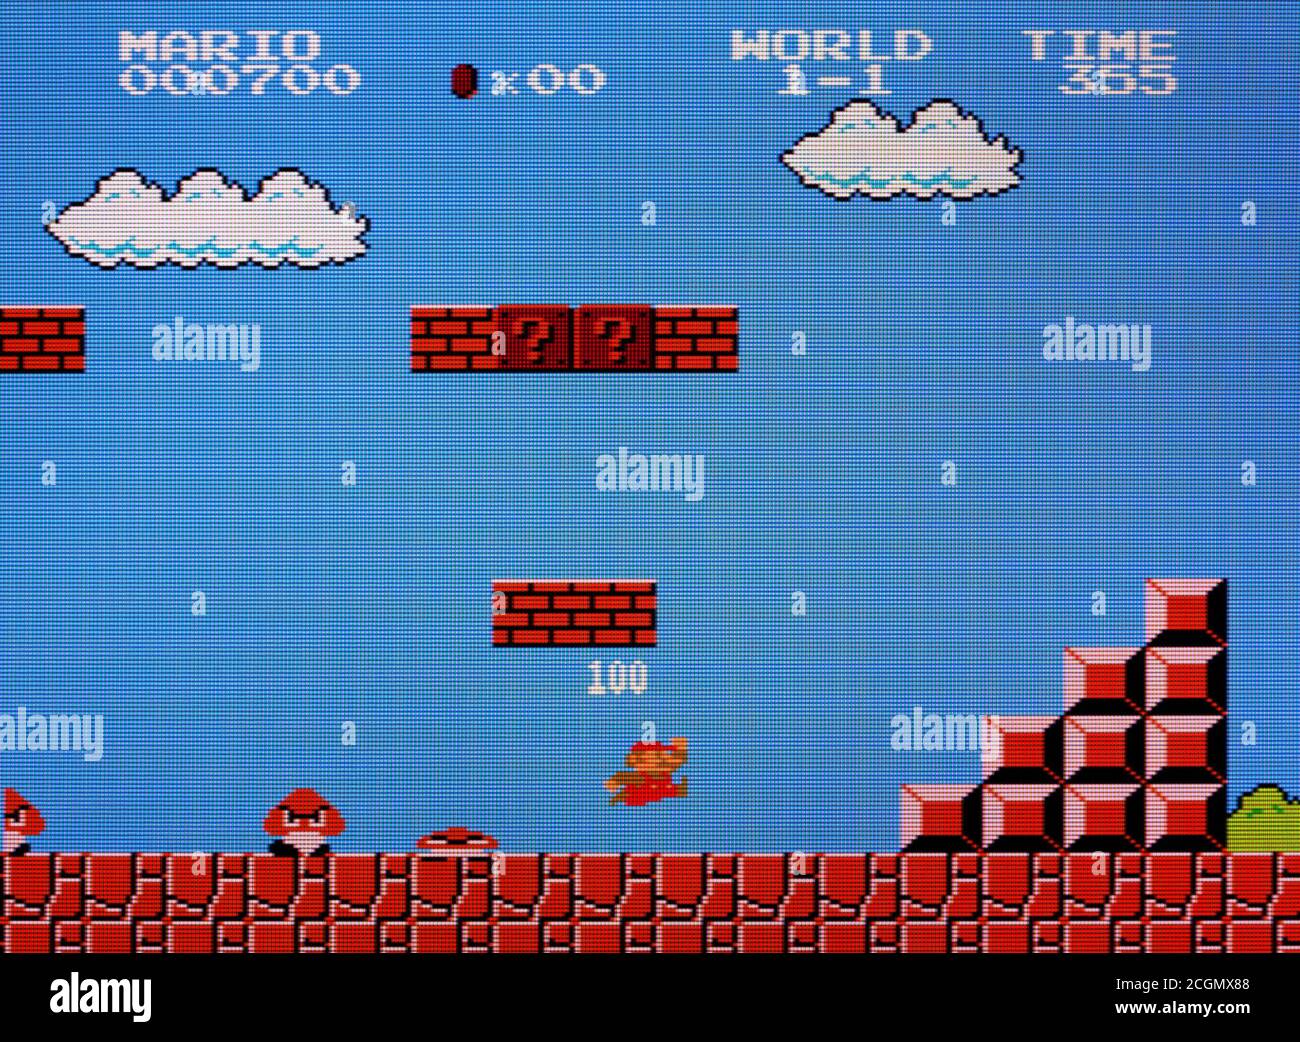 Super Mario World foi o primeiro - O Bom do Videogame